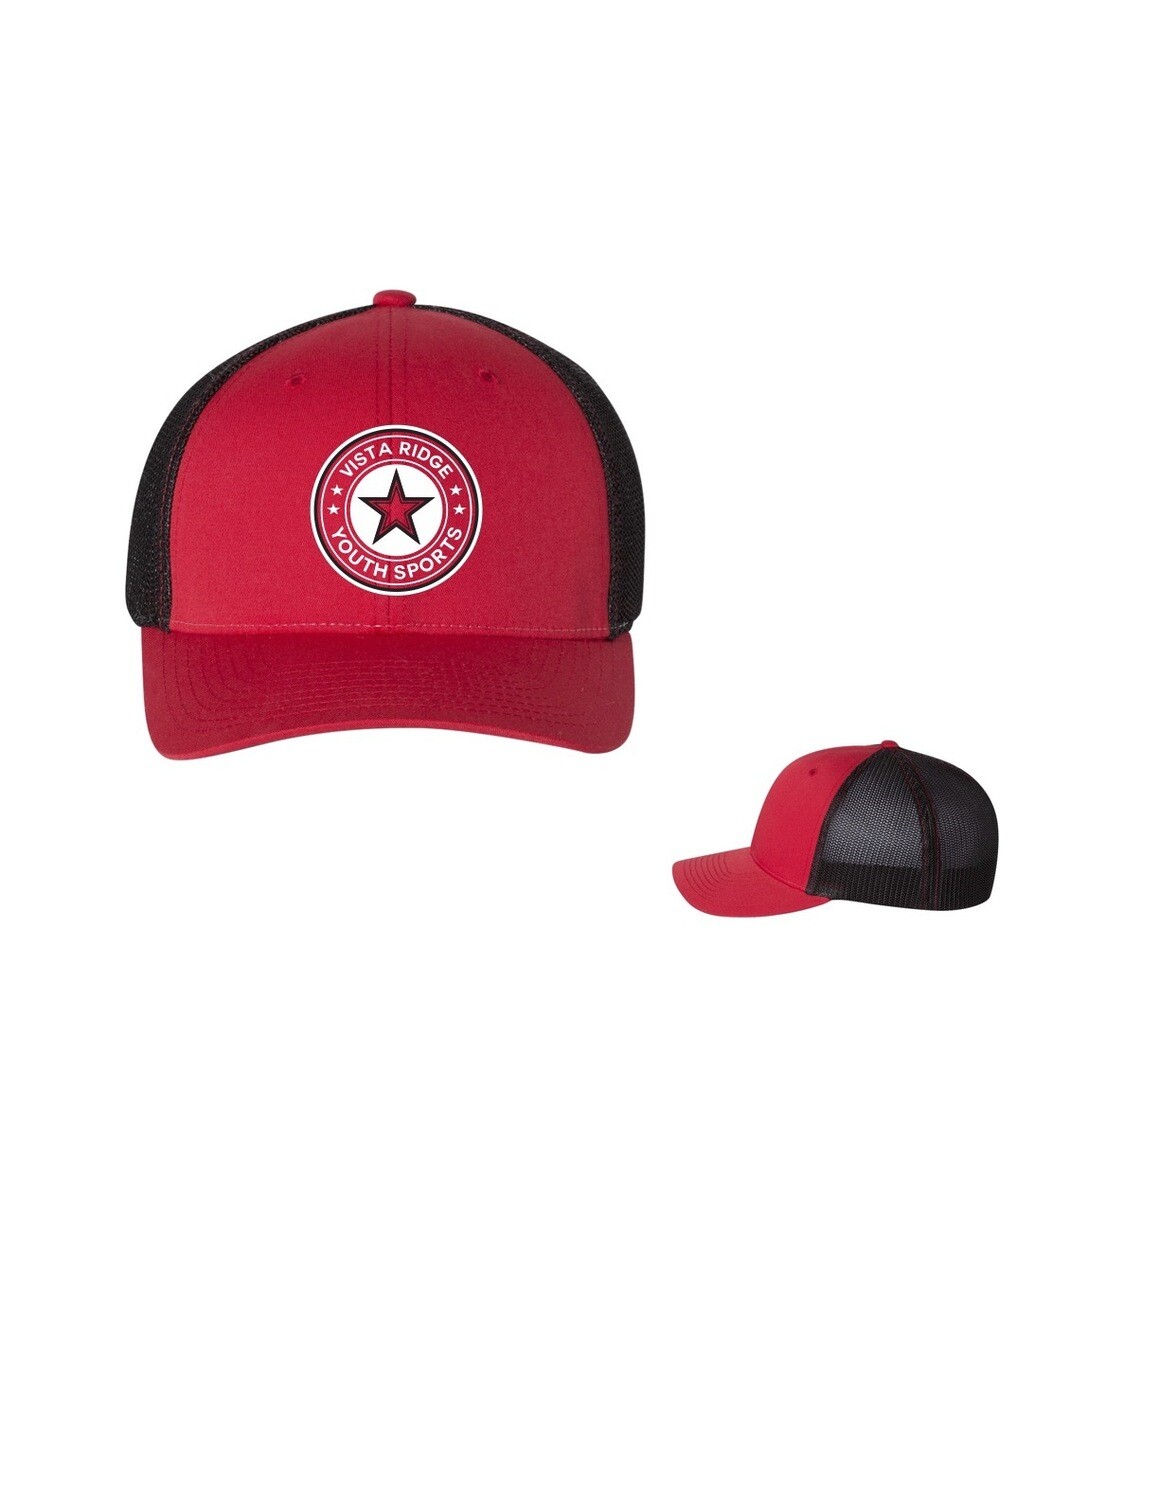 Logo Trucker Hat 
*More Color Options*